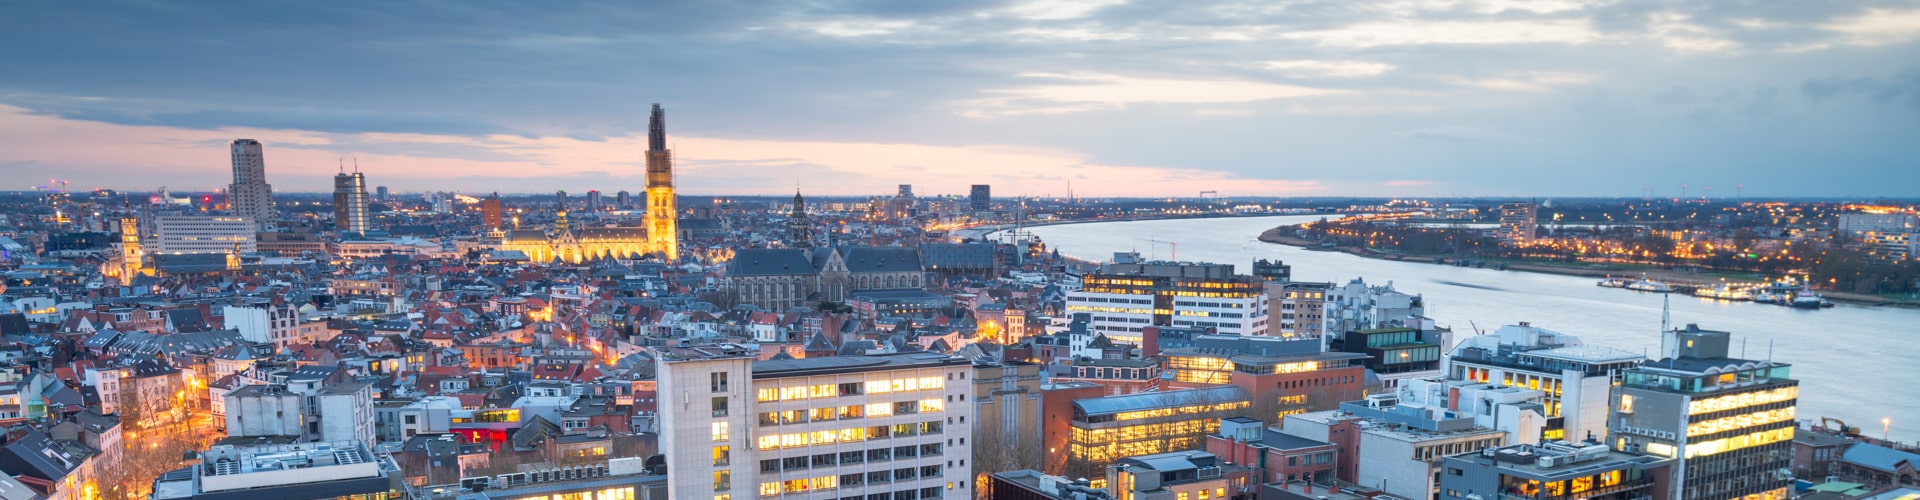 Panorama d'Anvers